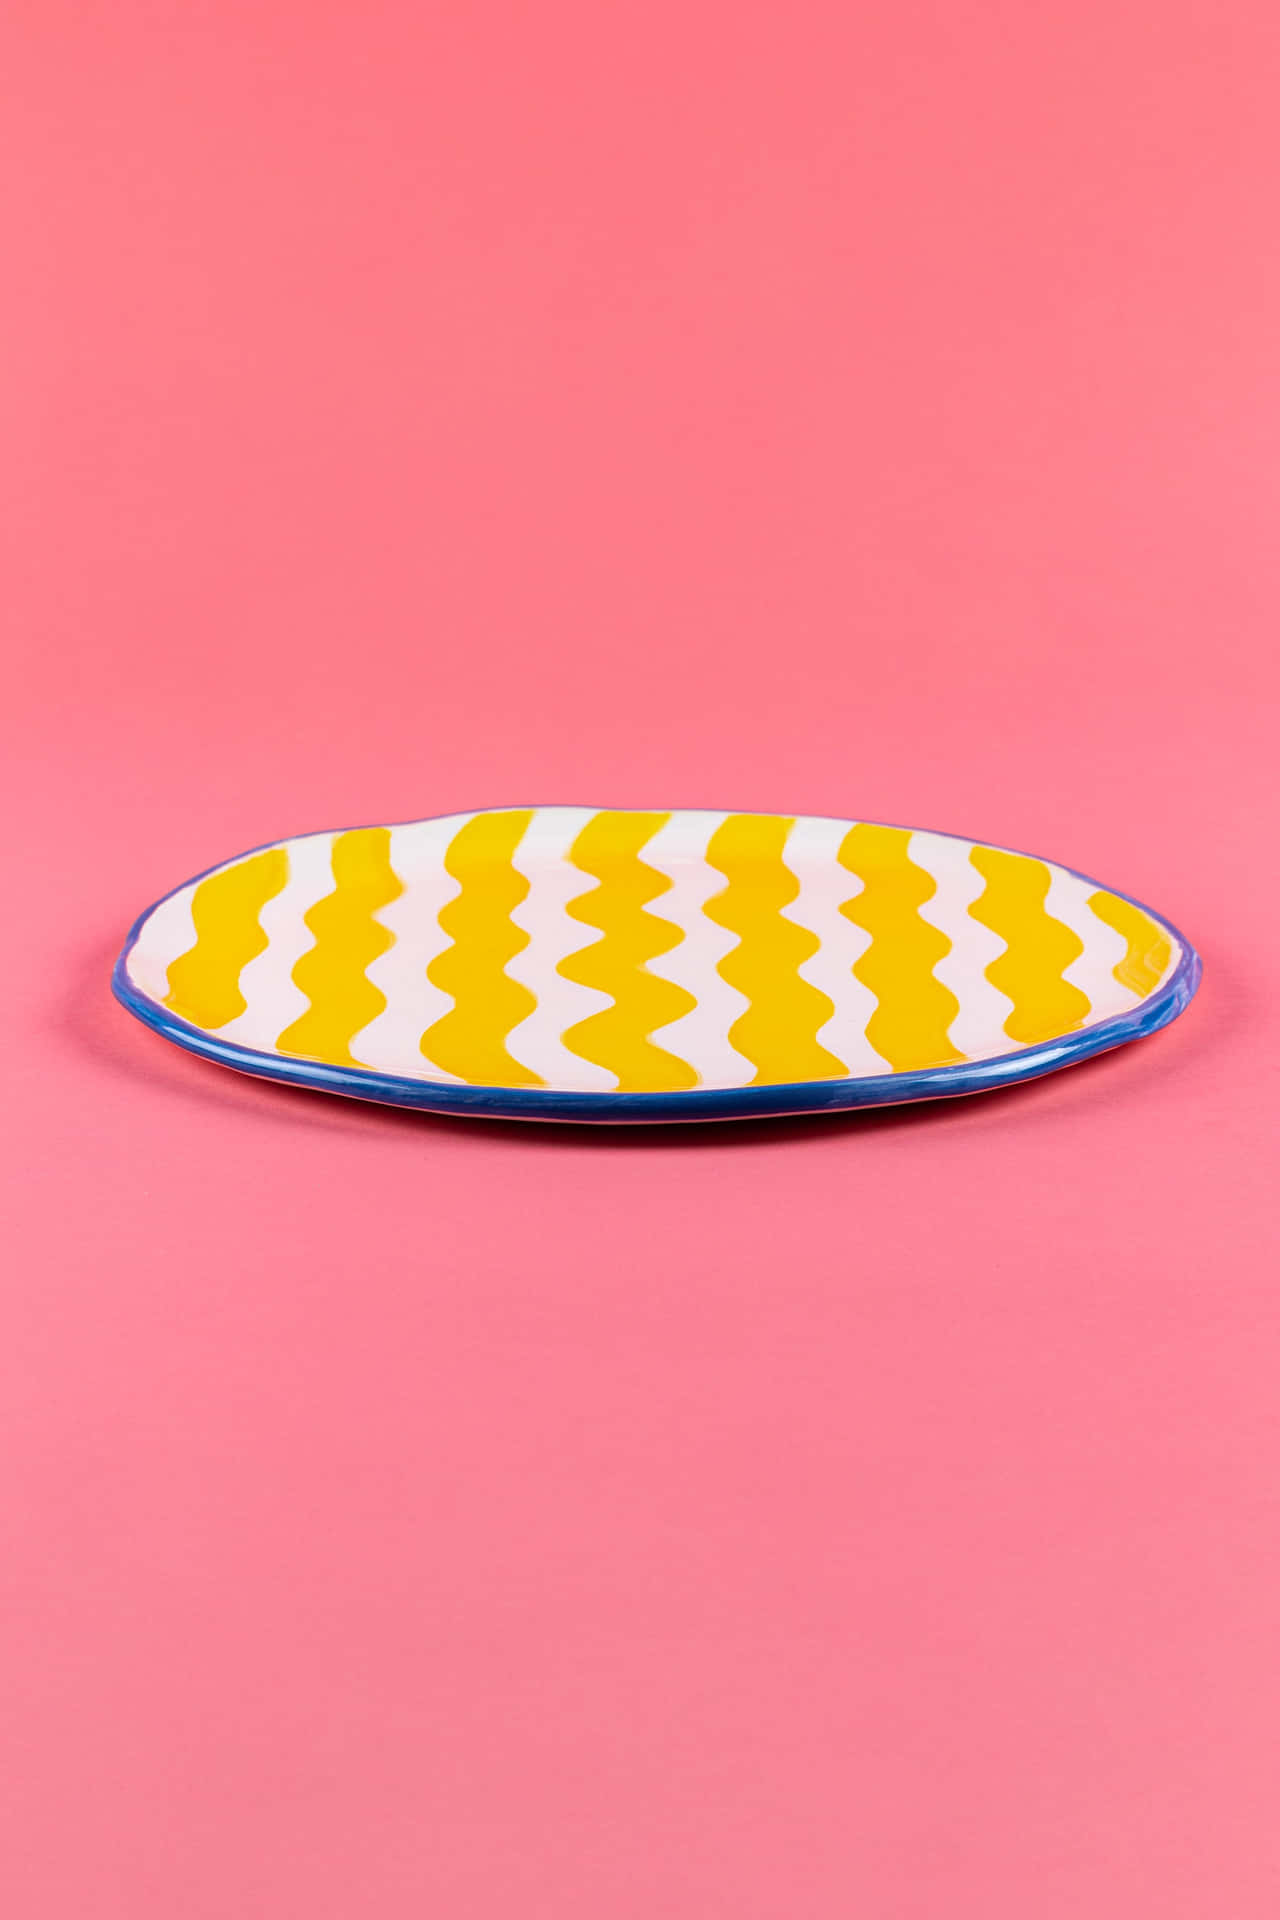 Aesthetic Pastel Minimalist Yellow Wave Stripe Plate Wallpaper